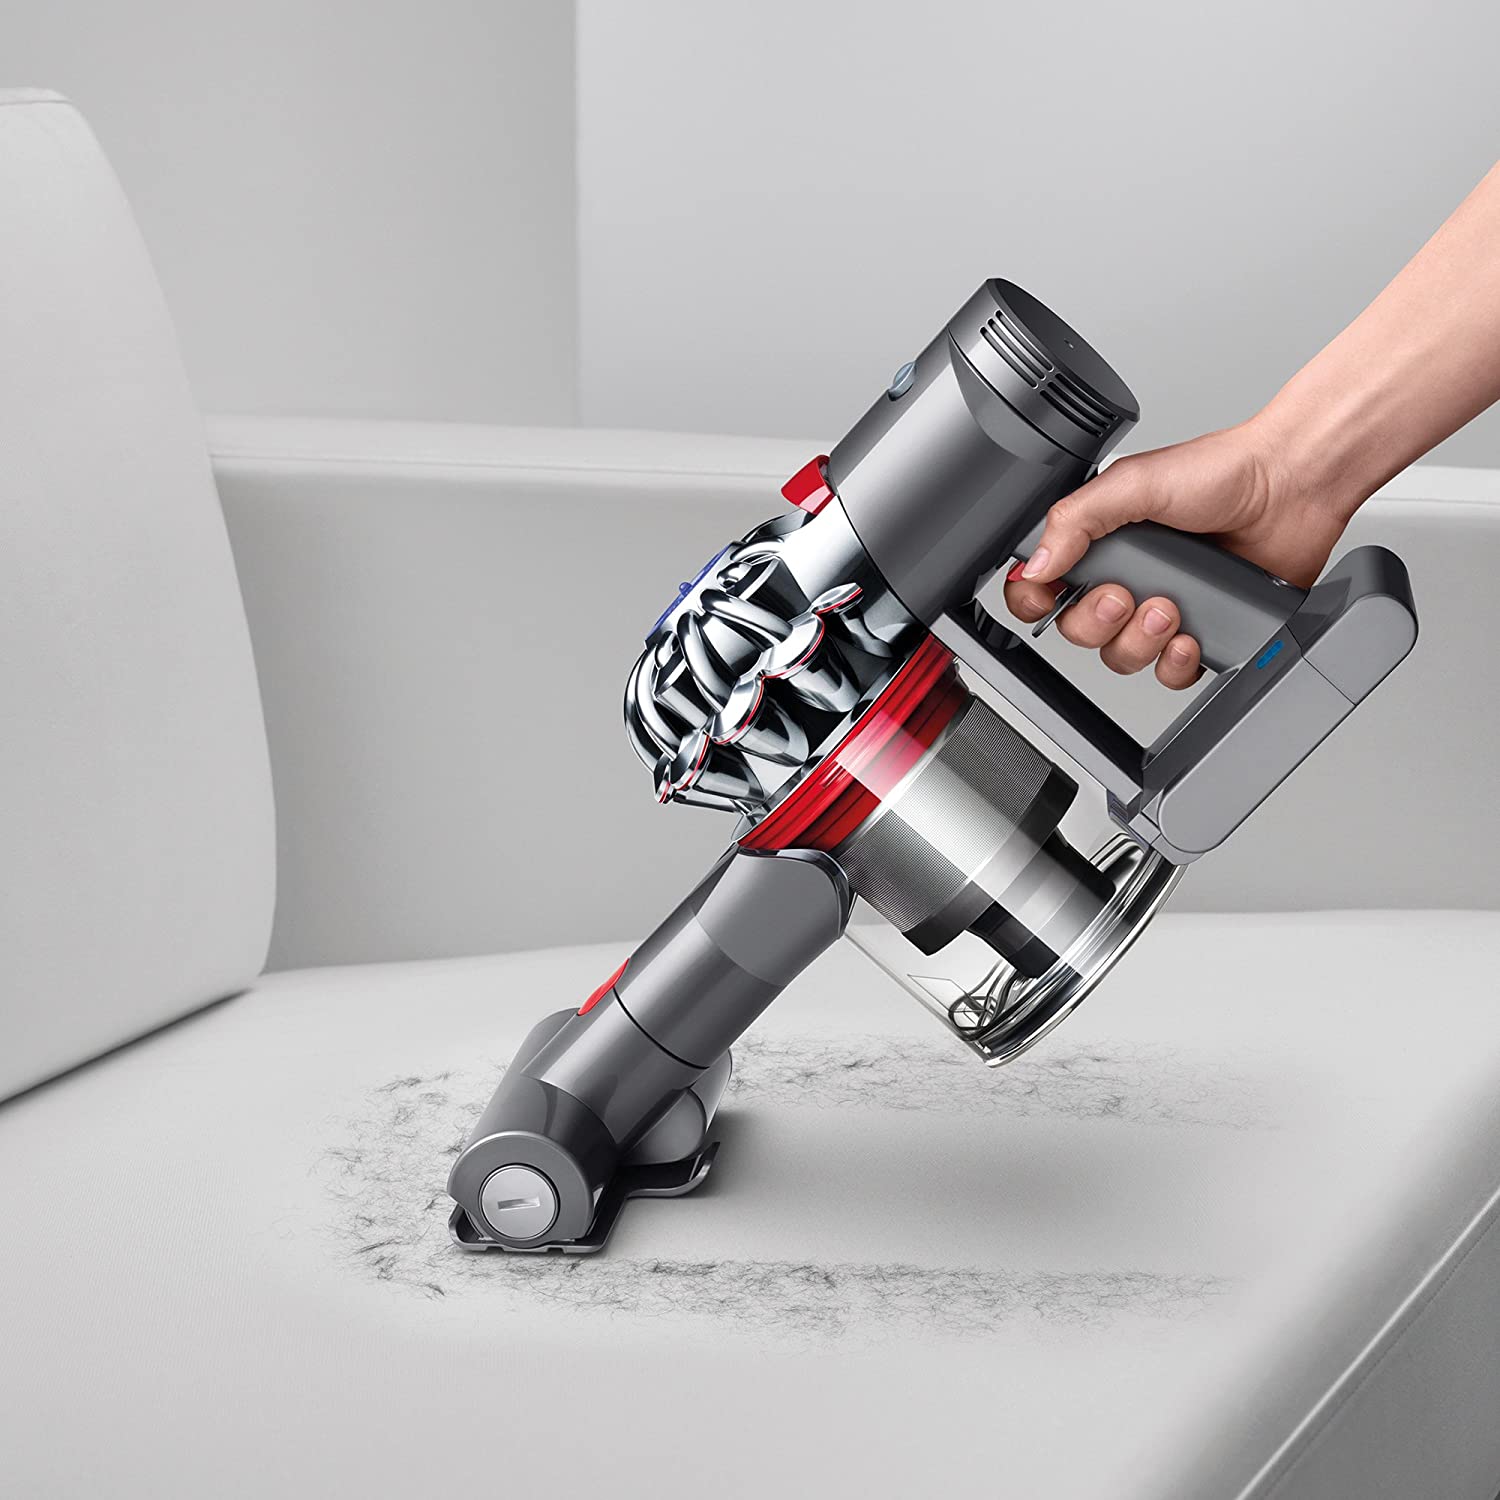 Dyson V7 Trigger Cord-Free Handheld Vacuum Cleaner現$199.99，約HK$1,550，香港門市價HK$2,200